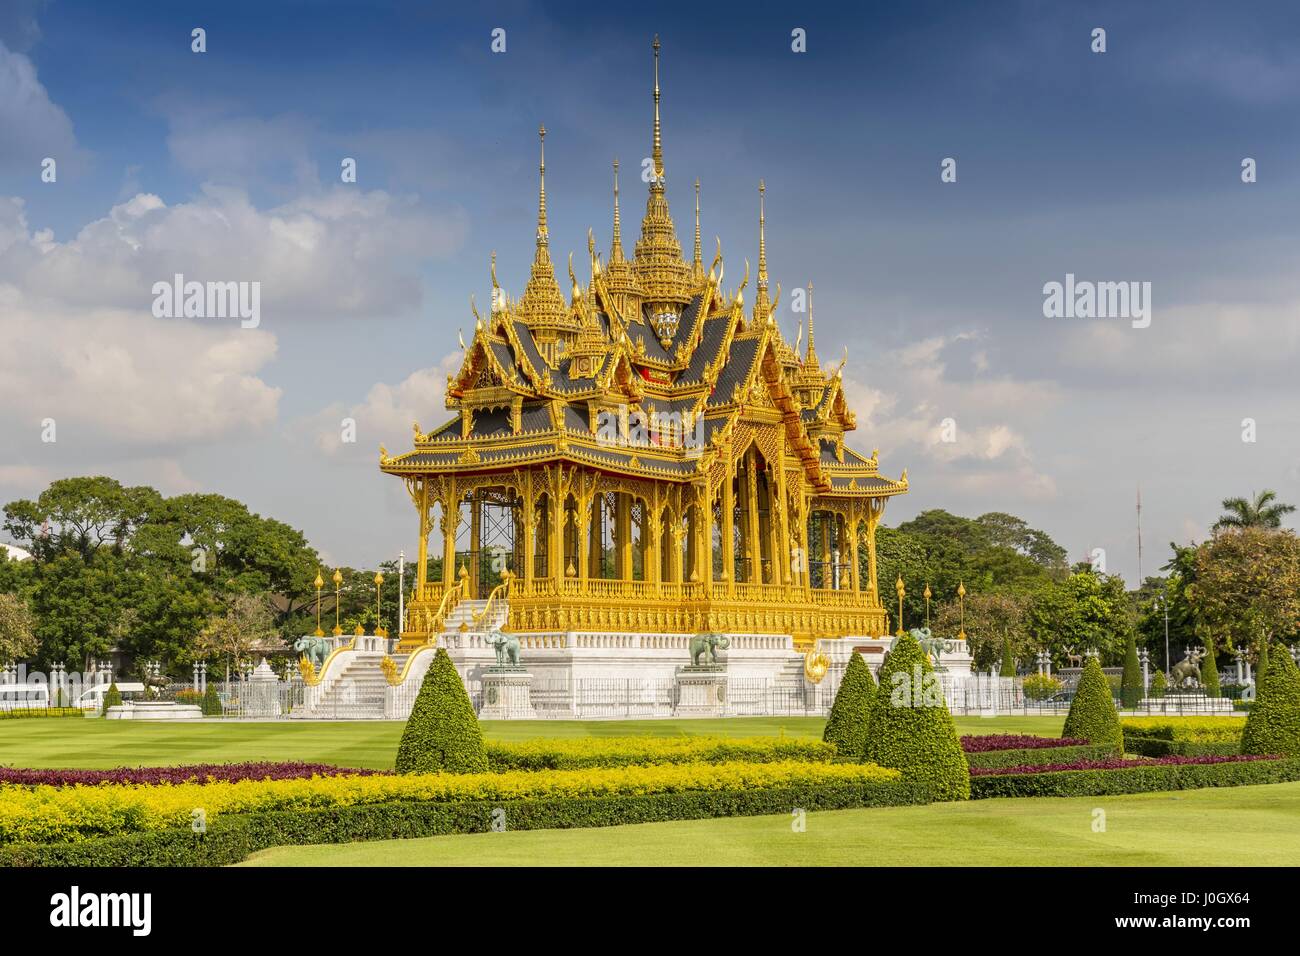 Memorial Crowns of the Auspice, The Borommangalanusarani Pavilion in the area of Ananta Samakhom Throne Hall in Thai Royal Dusit Palace, Bangkok, Thai Stock Photo